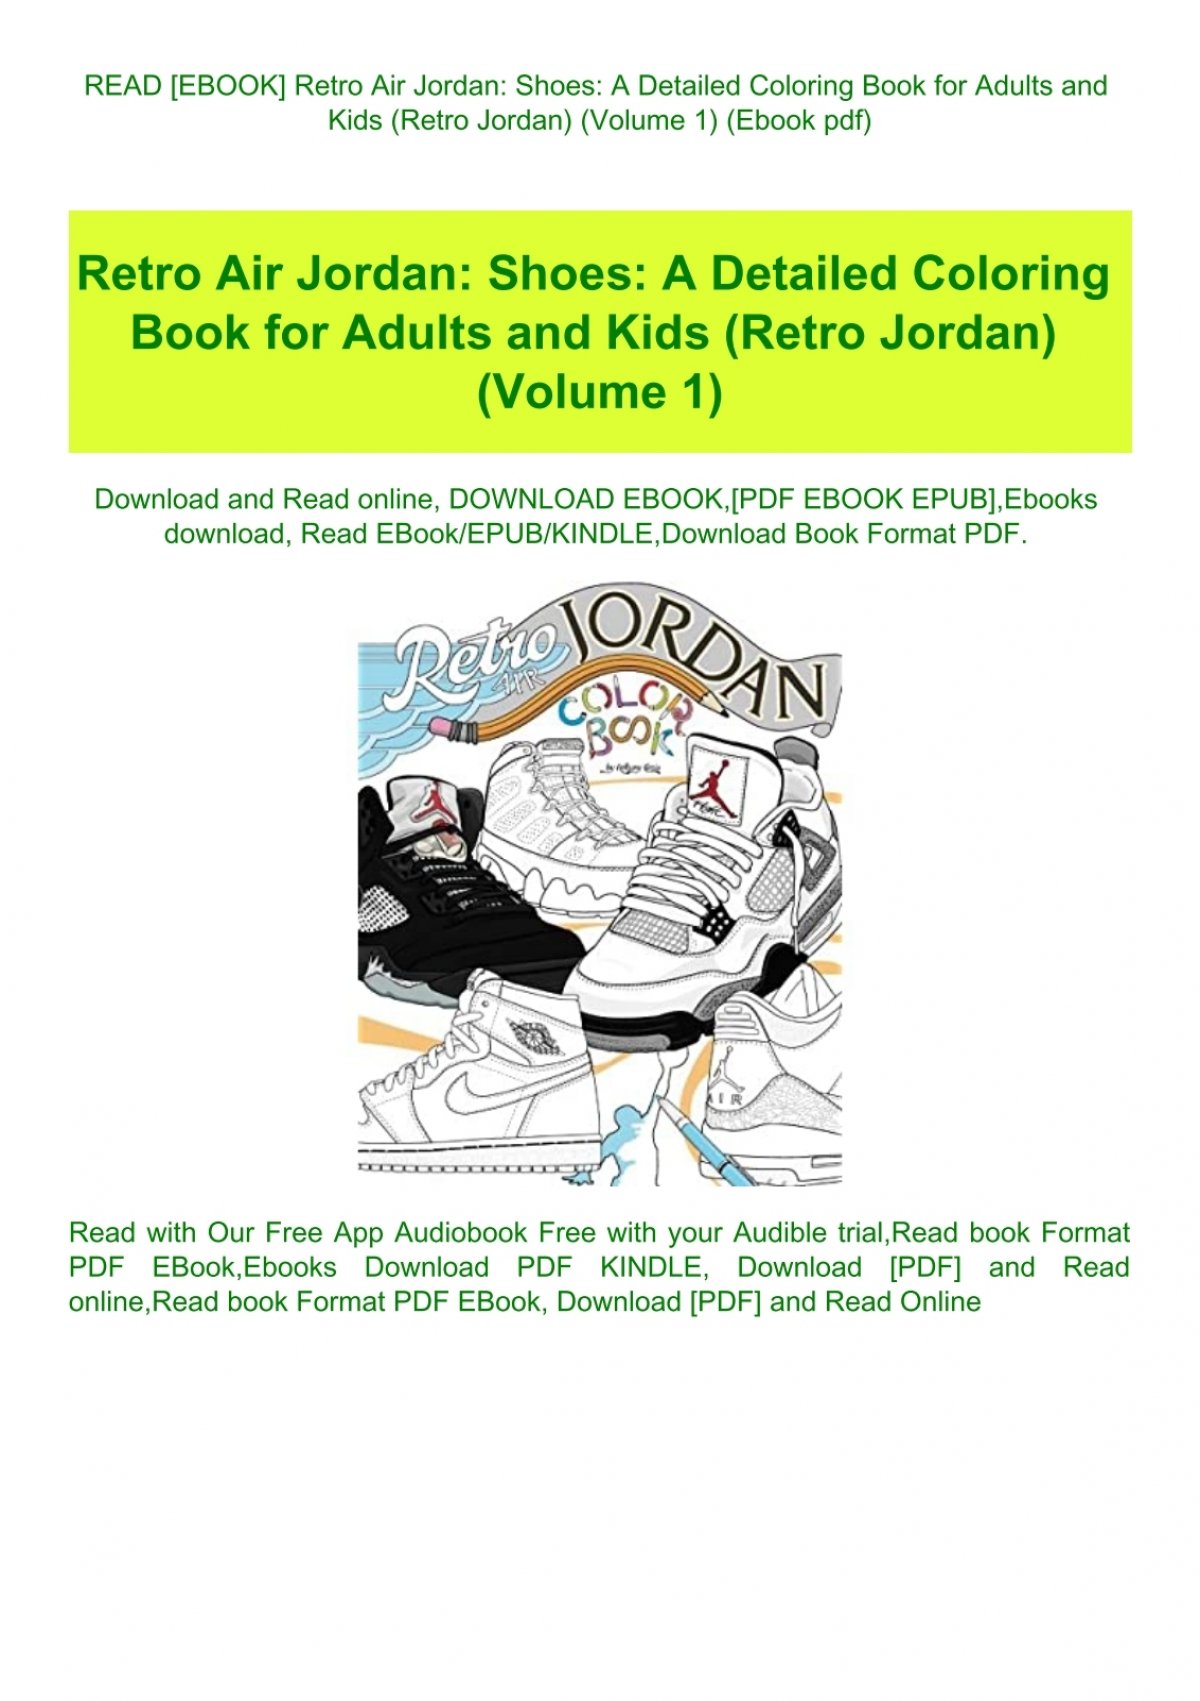 Download Read Ebook Retro Air Jordan Shoes A Detailed Coloring Book For Adults And Kids Retro Jordan Volume 1 Ebook Pdf